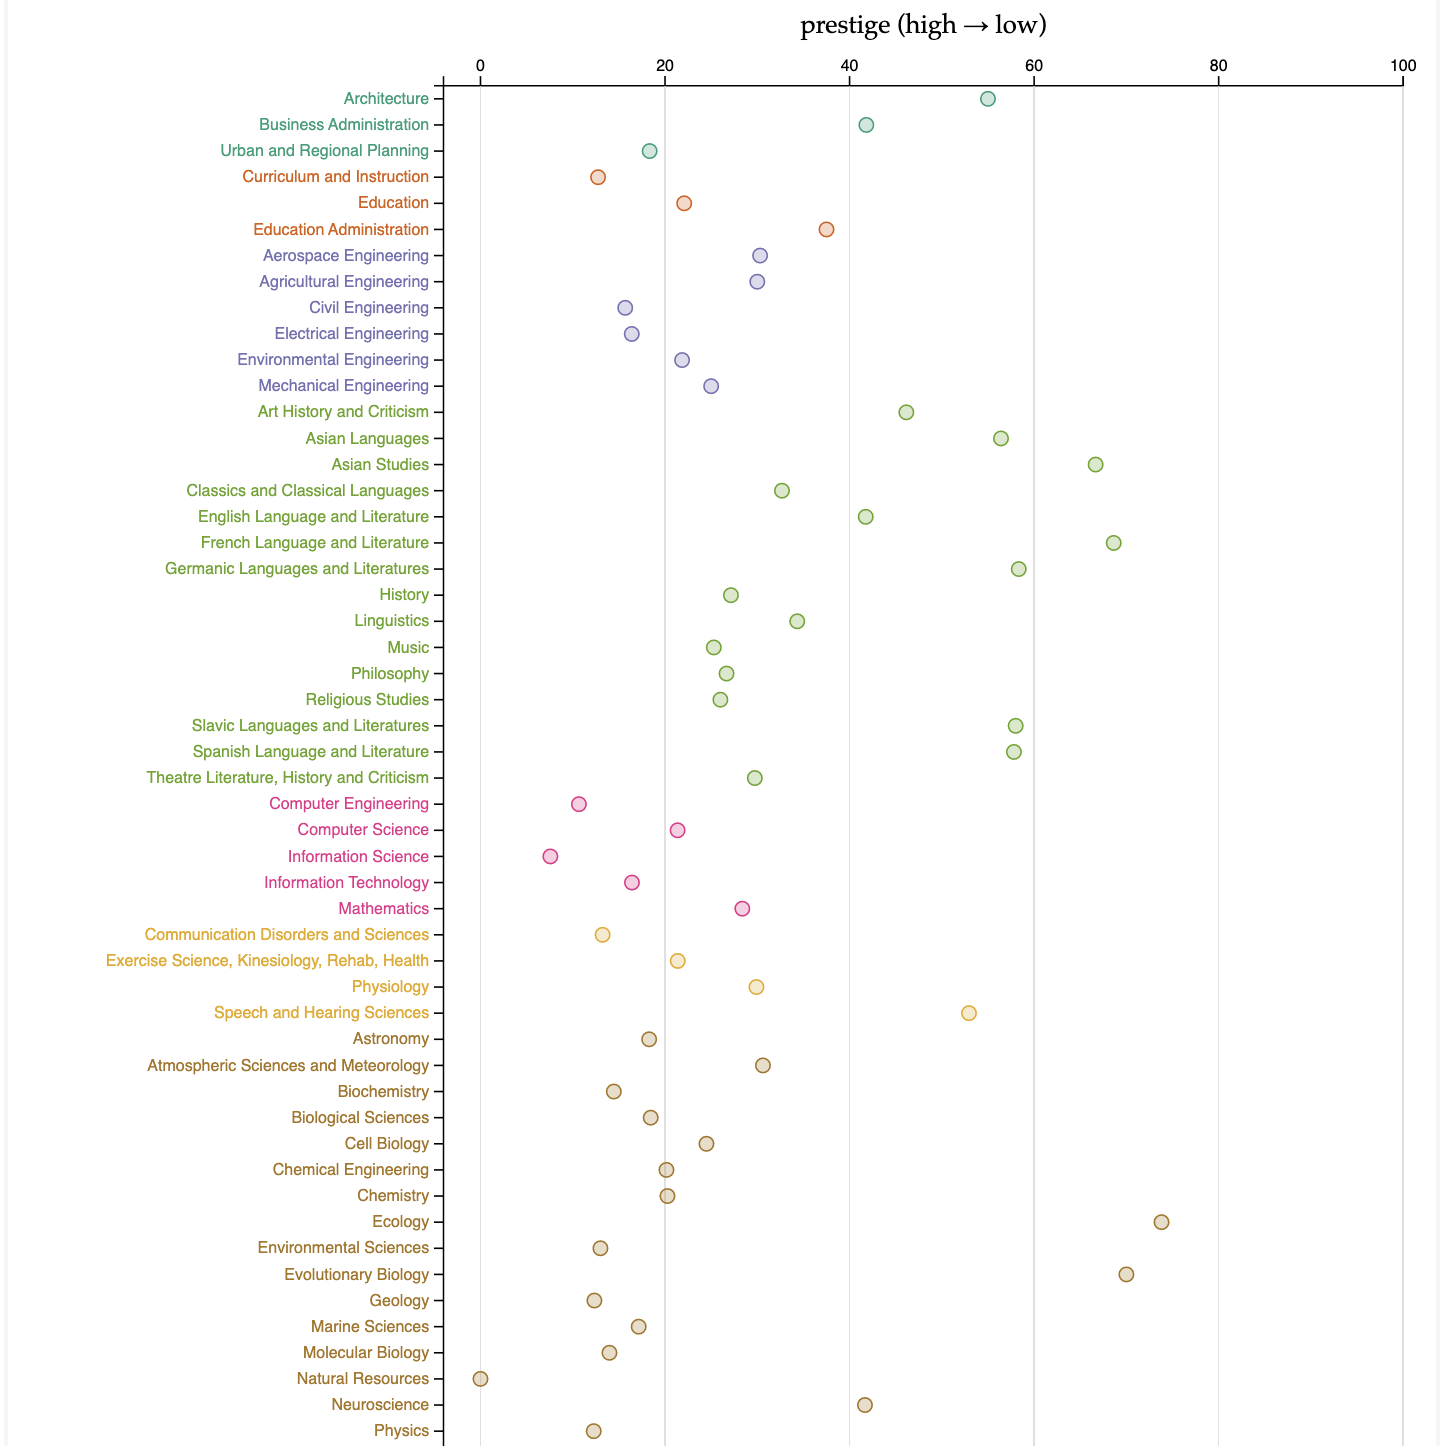 a visualization of university ranks